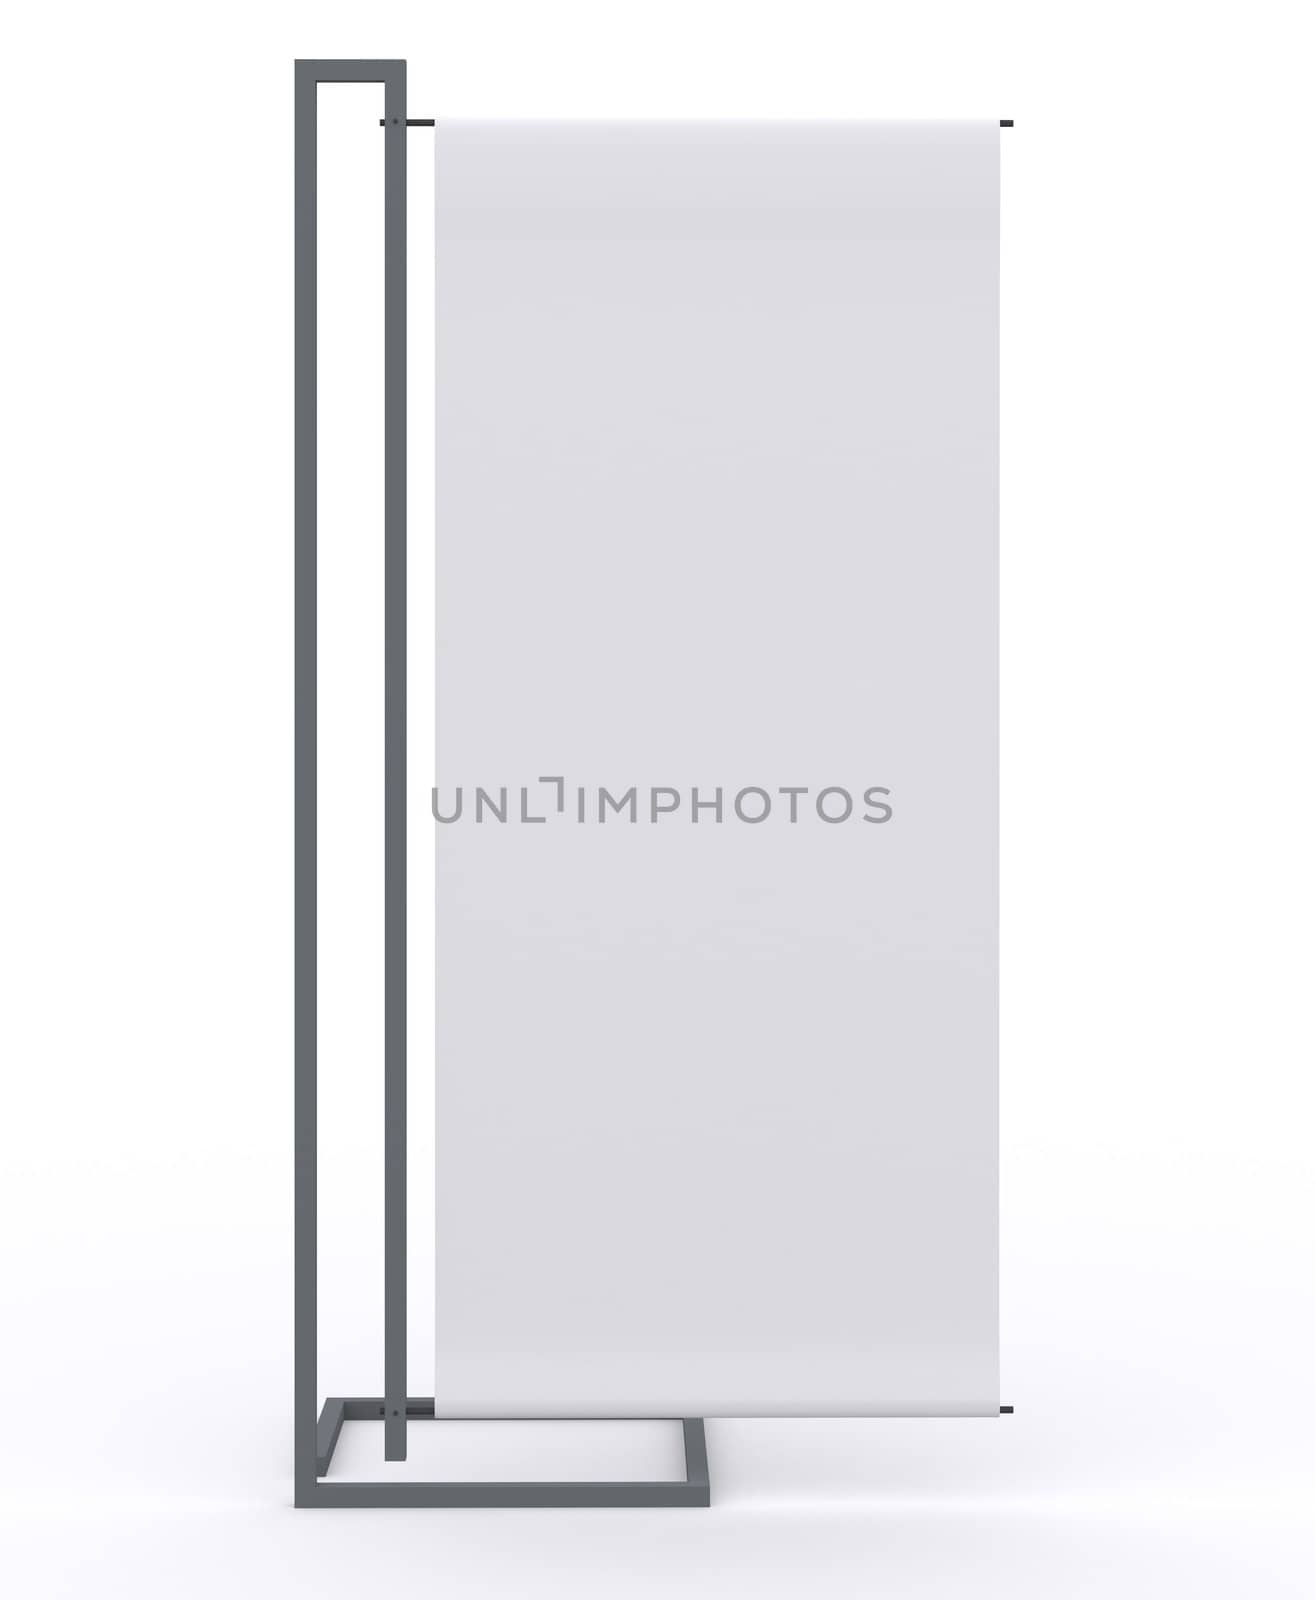 blank banner display new design aluminum frame template for design work,isolate on white background